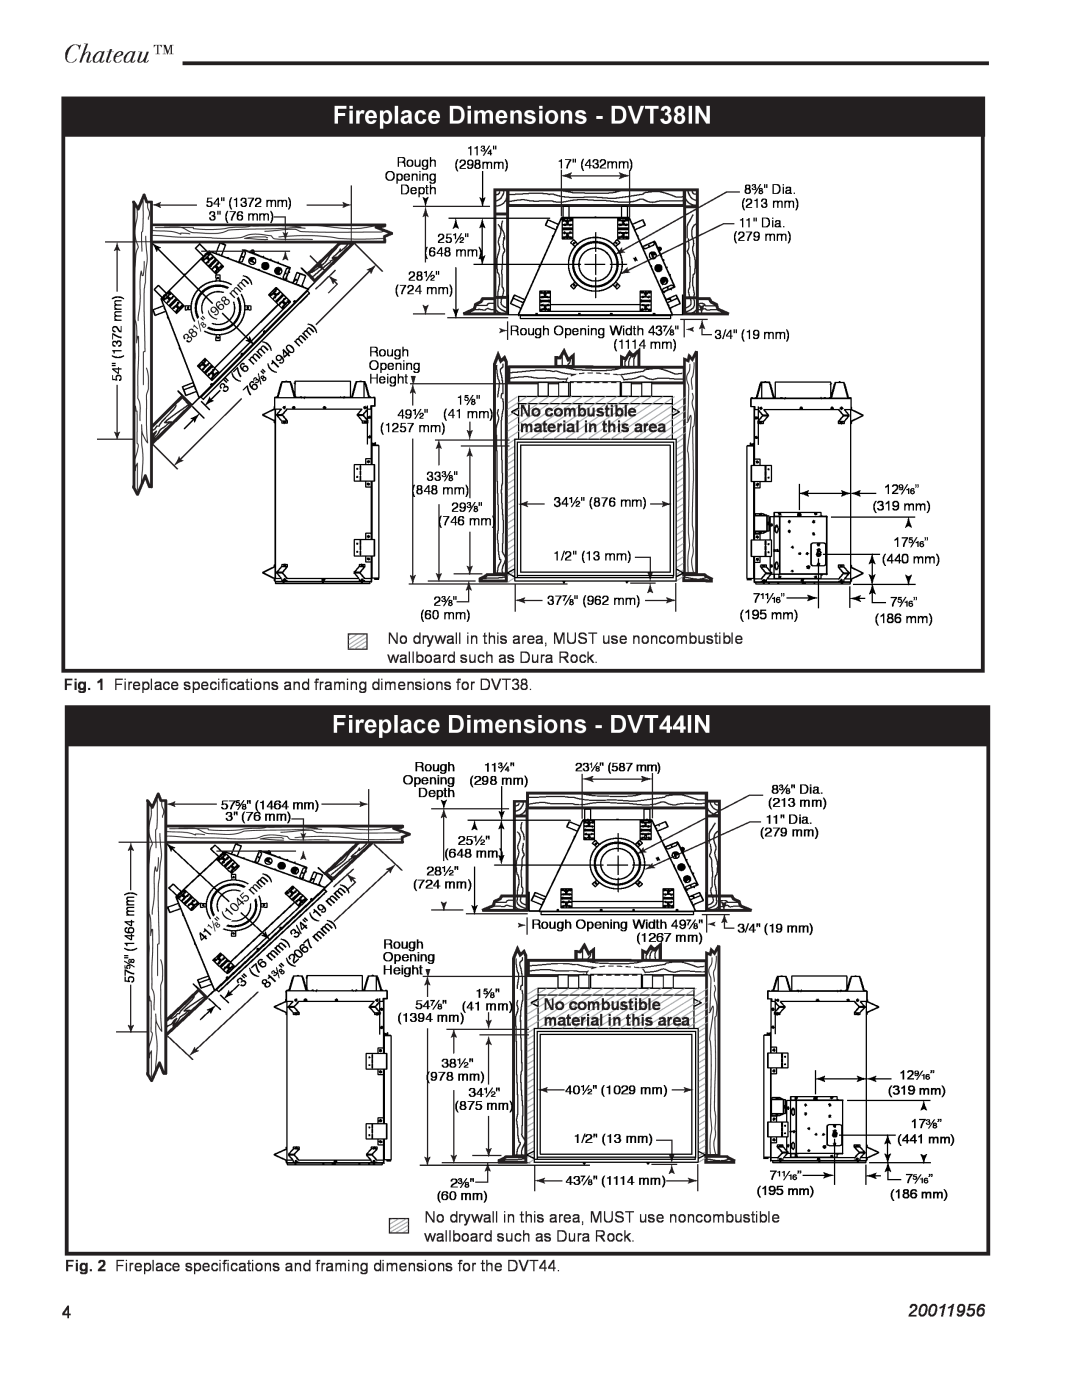 CFM Corporation Chateau, Fireplace Dimensions - DVT38IN, Fireplace Dimensions - DVT44IN, 20011956, No combustible 